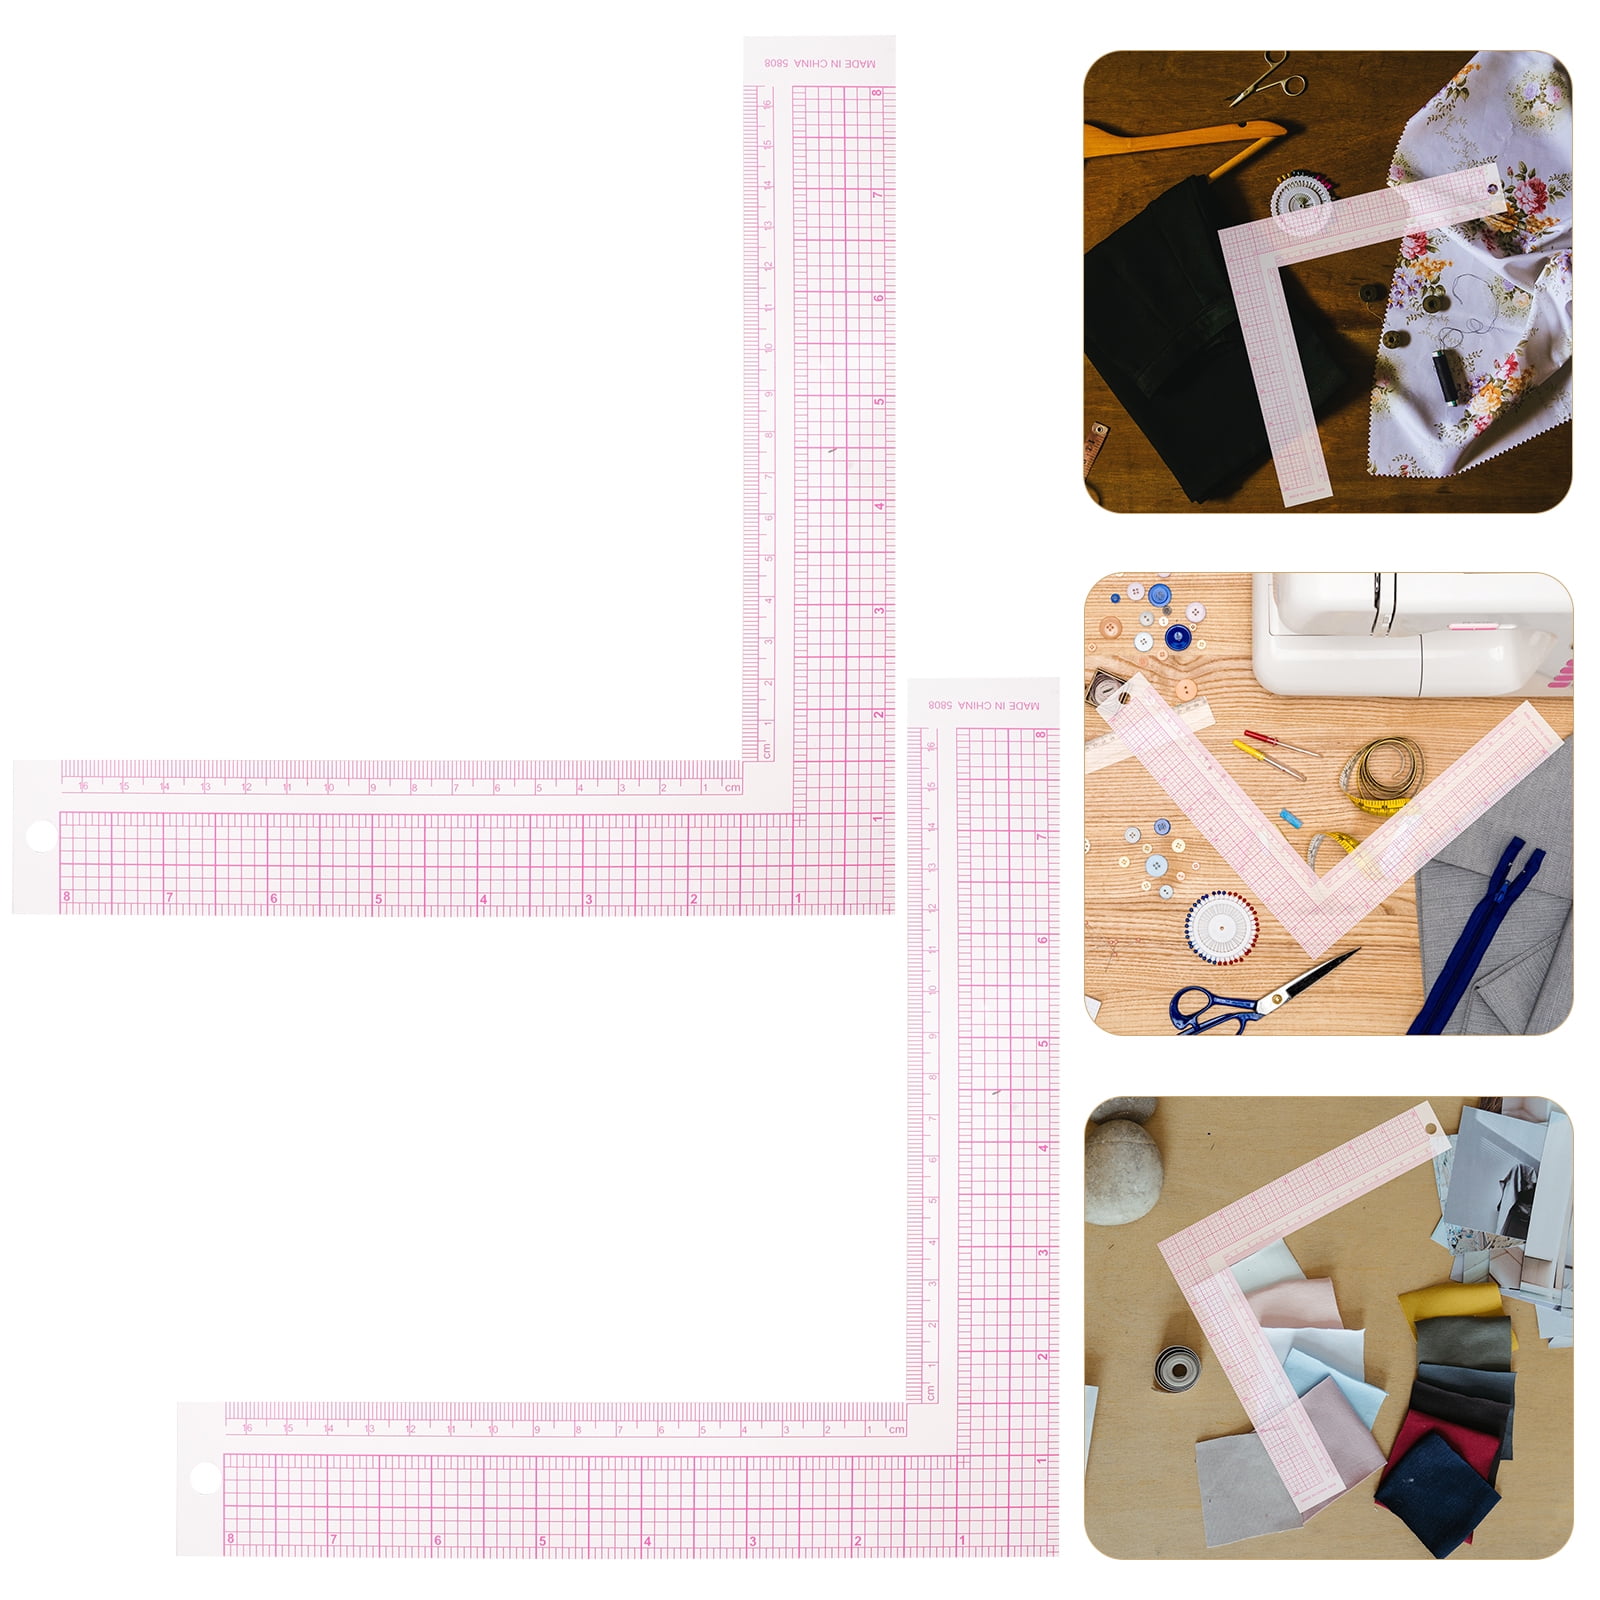  Lusofie 2 Pcs Plastic Sewing Ruler， L Square Ruler Framing  Ruler Sewing Measure Tailor Ruler Clear Sewing Ruler for Tailor Craft Tool  Drawing Measuring Supplies : Arts, Crafts & Sewing